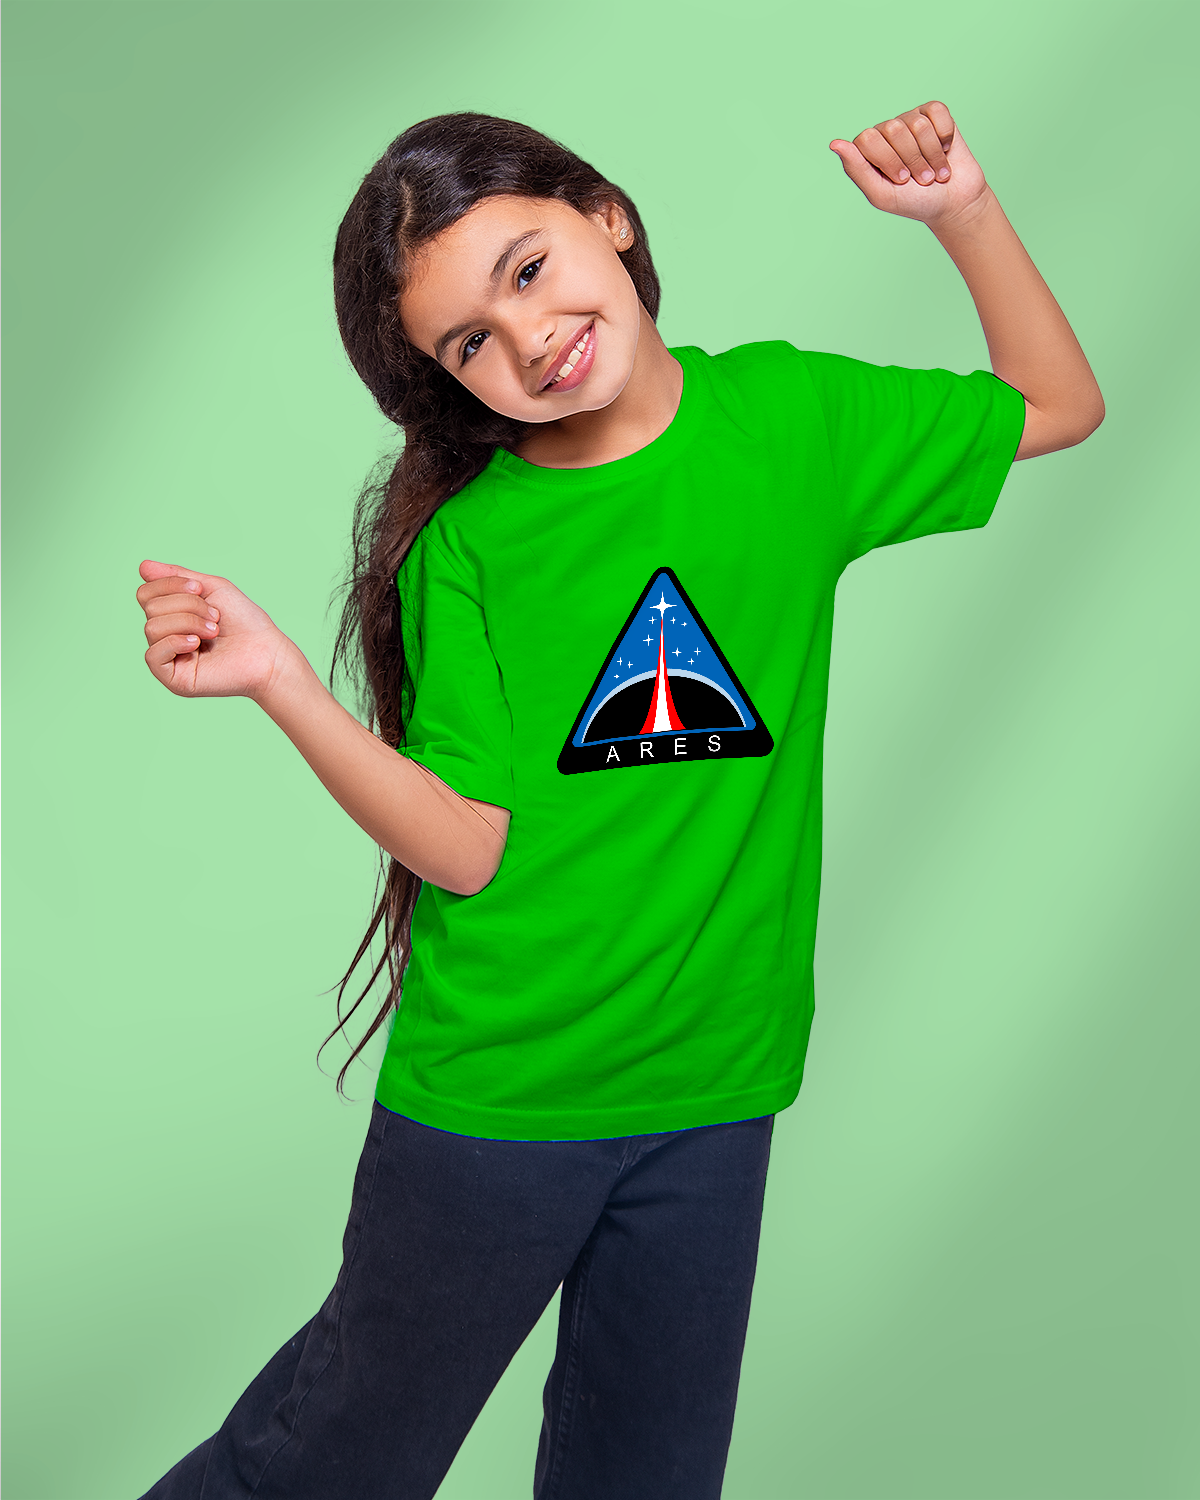 Girls' T-Shirt (NASA Ares)